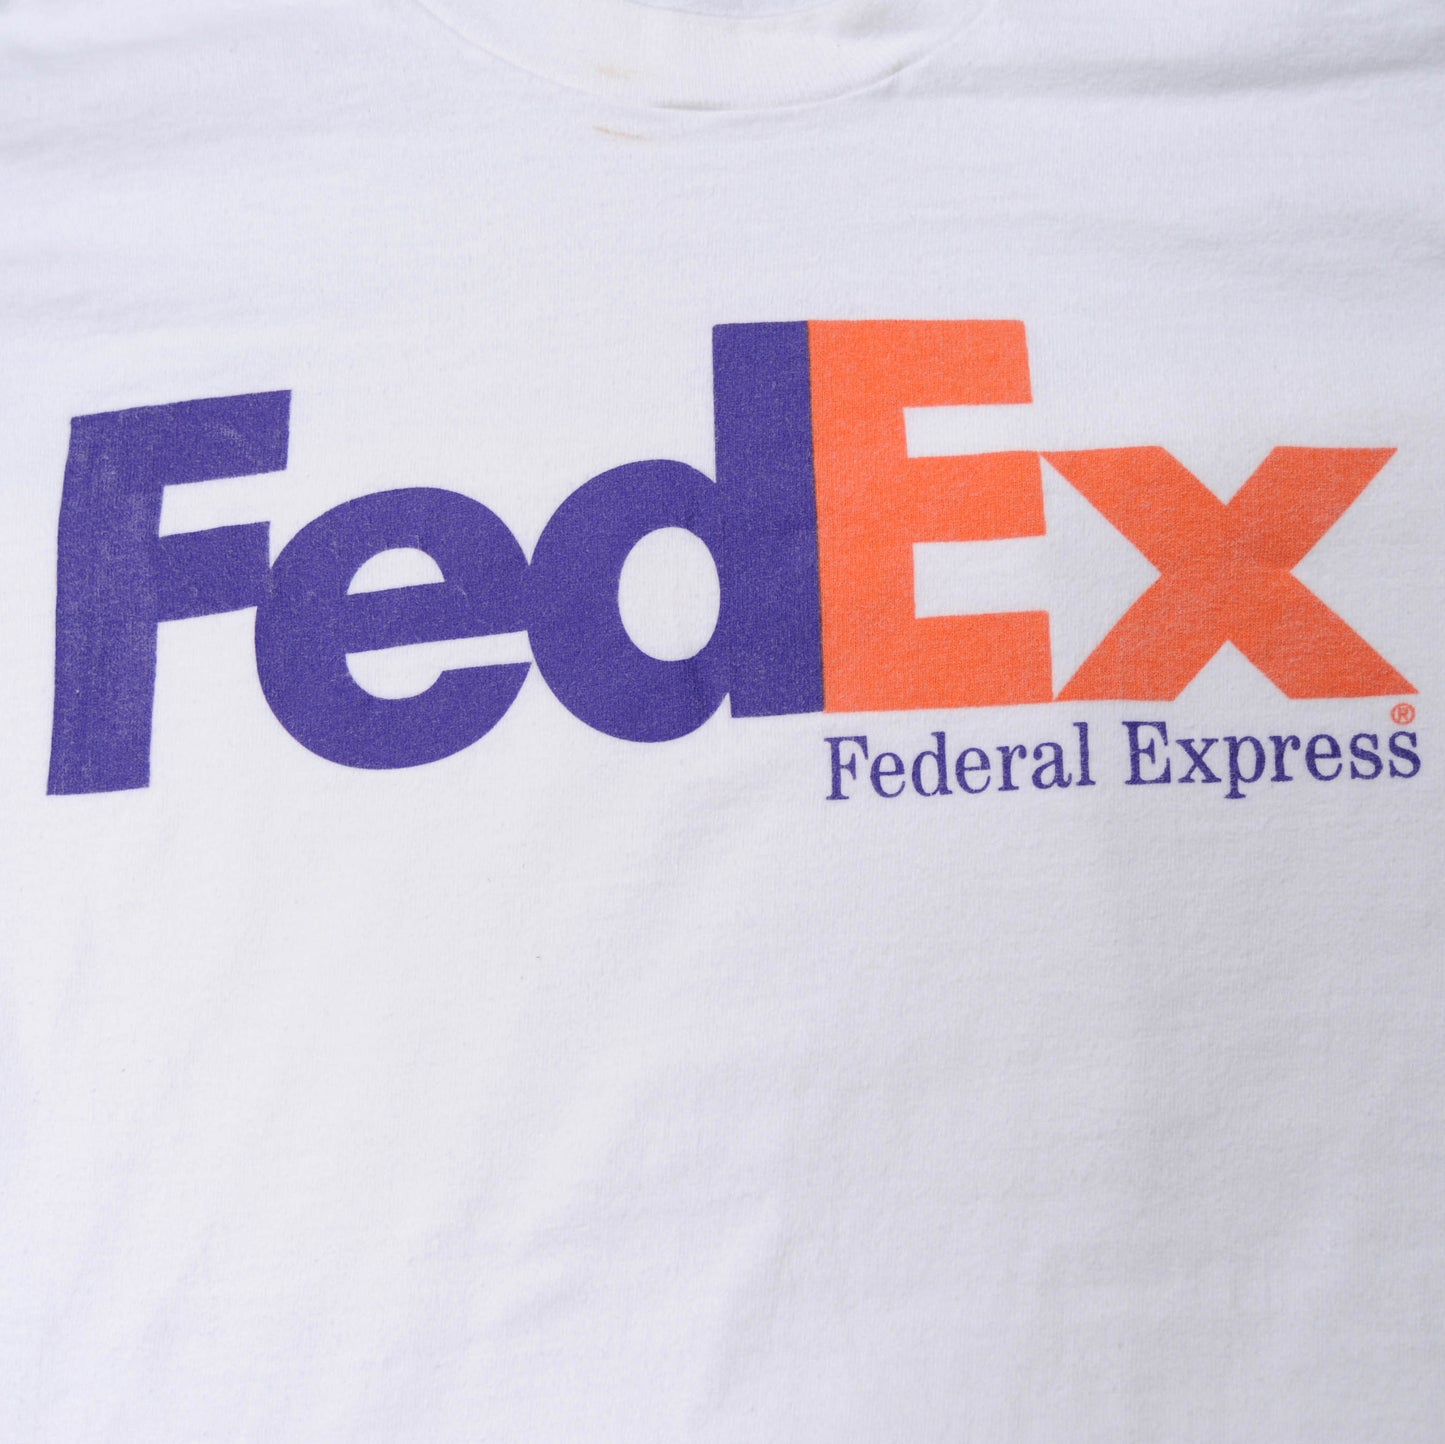 90's FedEx 企業Tシャツ(M)/A3423T-S